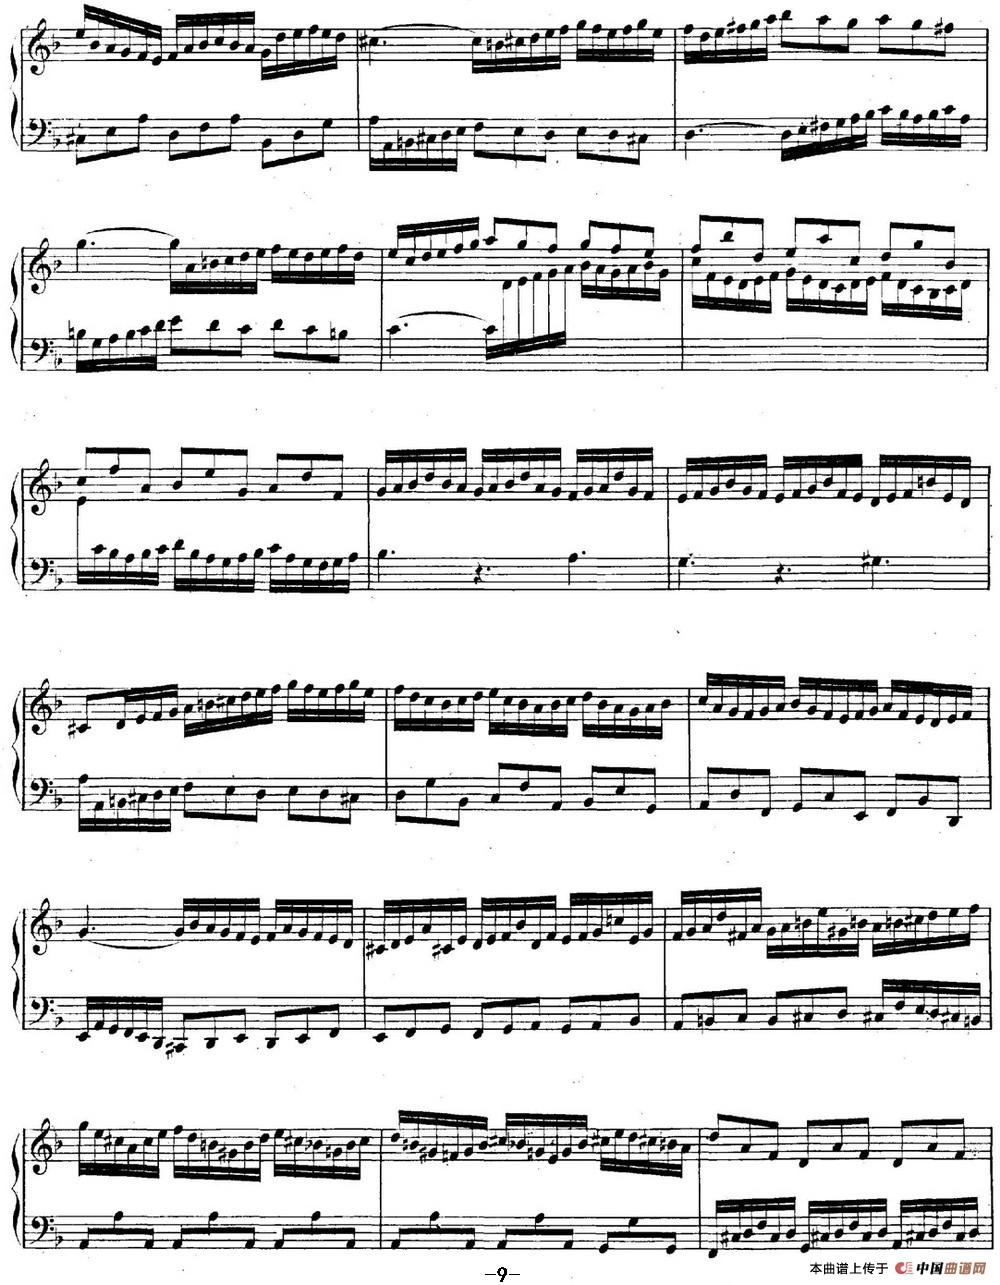 英国组曲No.6 巴赫 d小调 6th Suite BWV 811